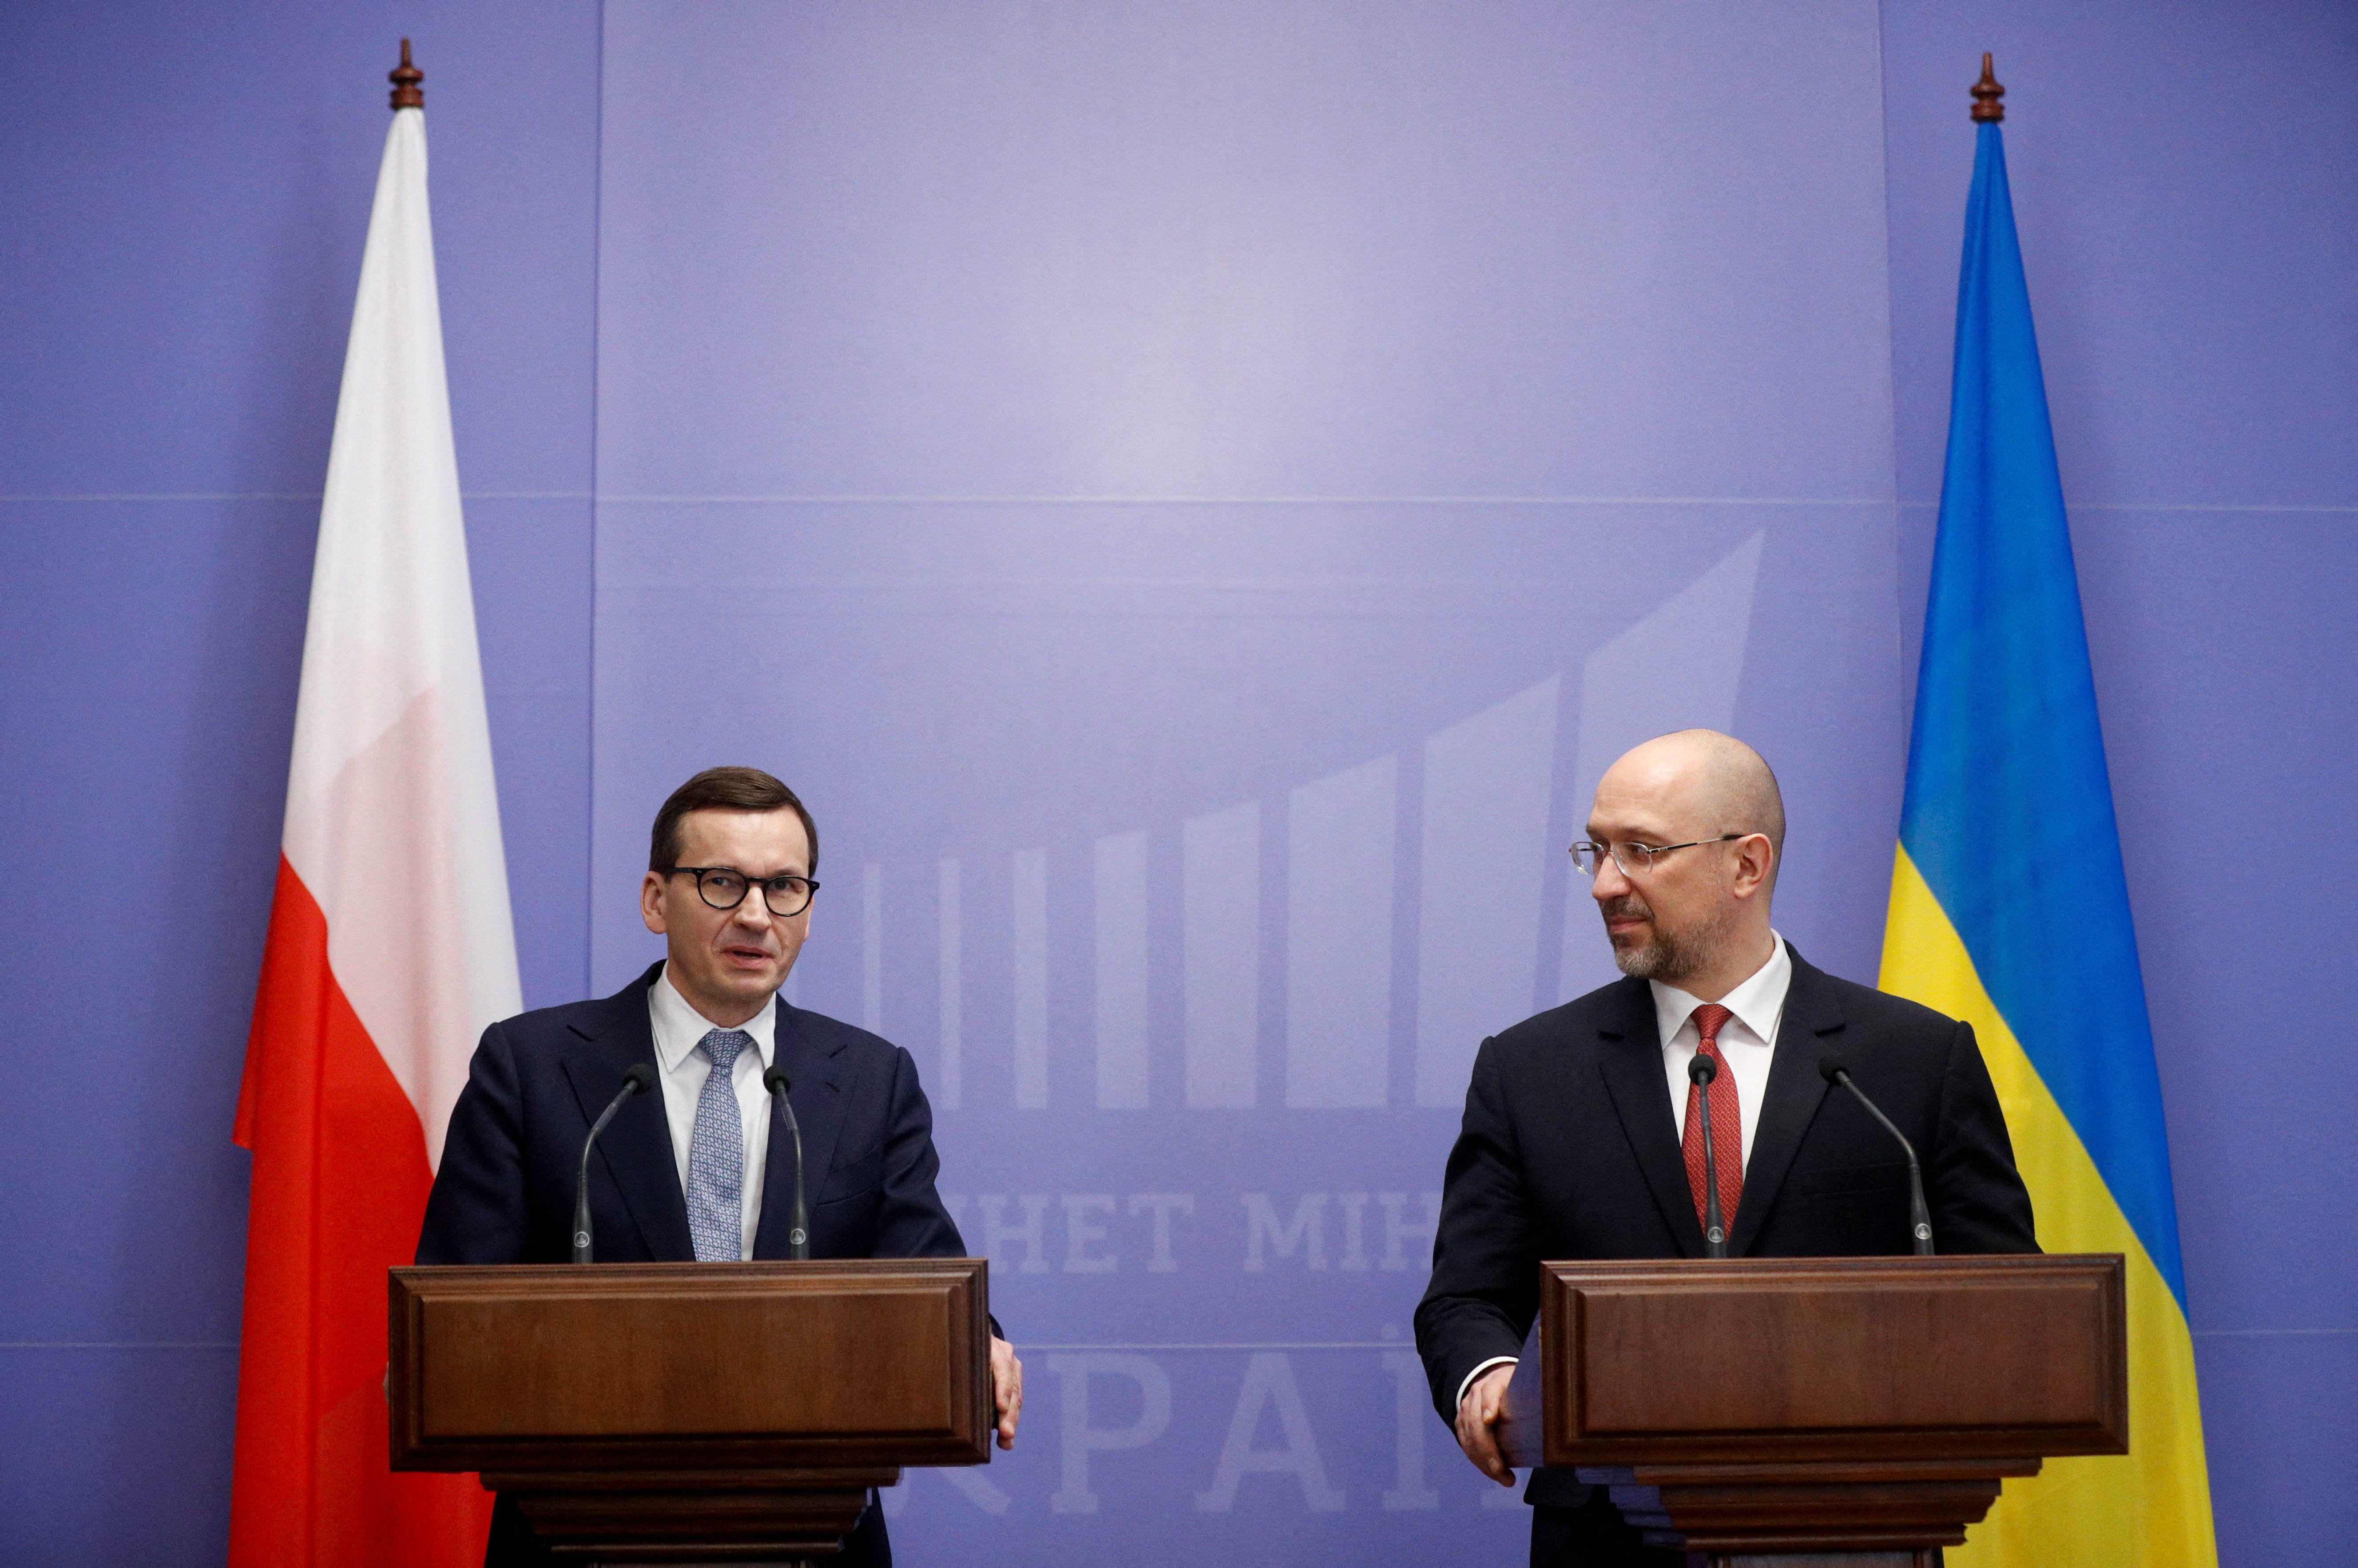 Ukrainian PM Denys Shmygal and his Polish counterpart Mateusz Morawiecki meet in Kyiv